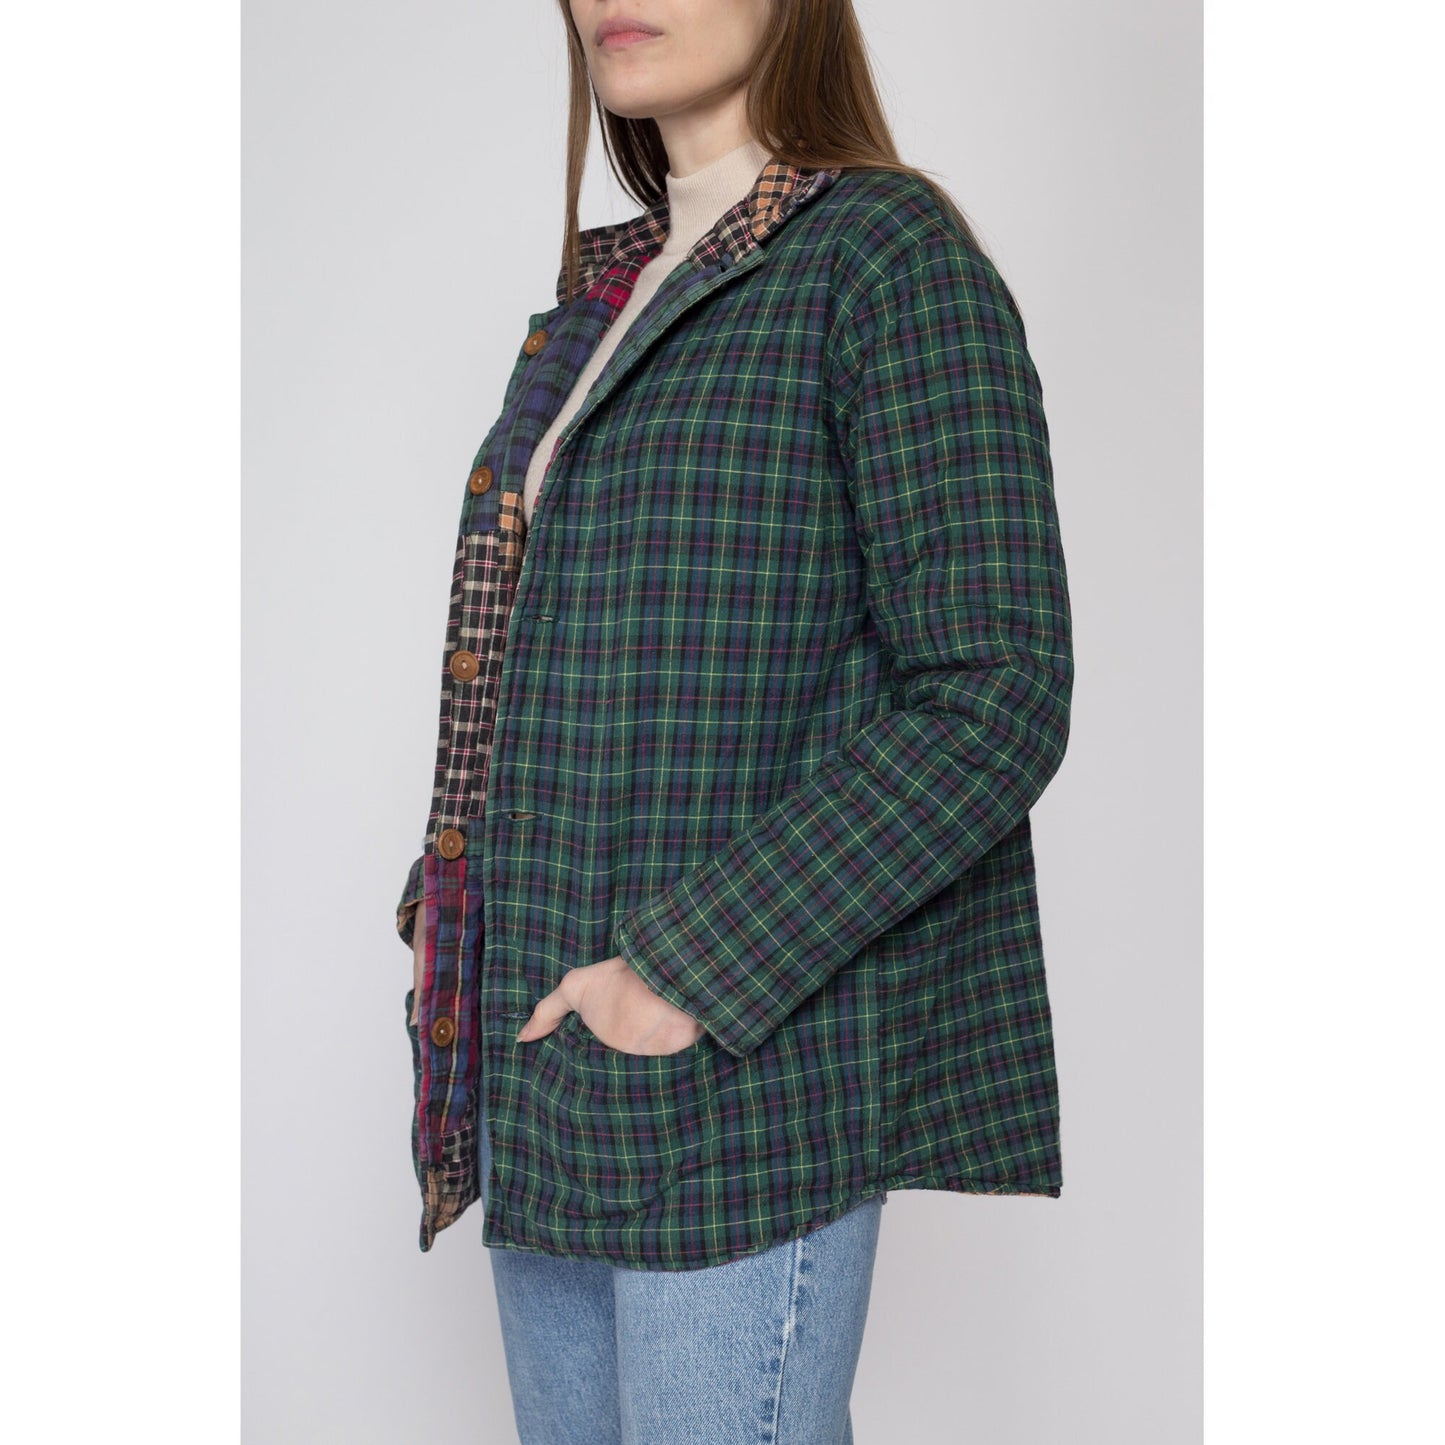 Small 90s Boho Reversible Plaid Patchwork Quilted Jacket | Vintage Patch Magic Multicolor Cotton Button Up Hippie Coat